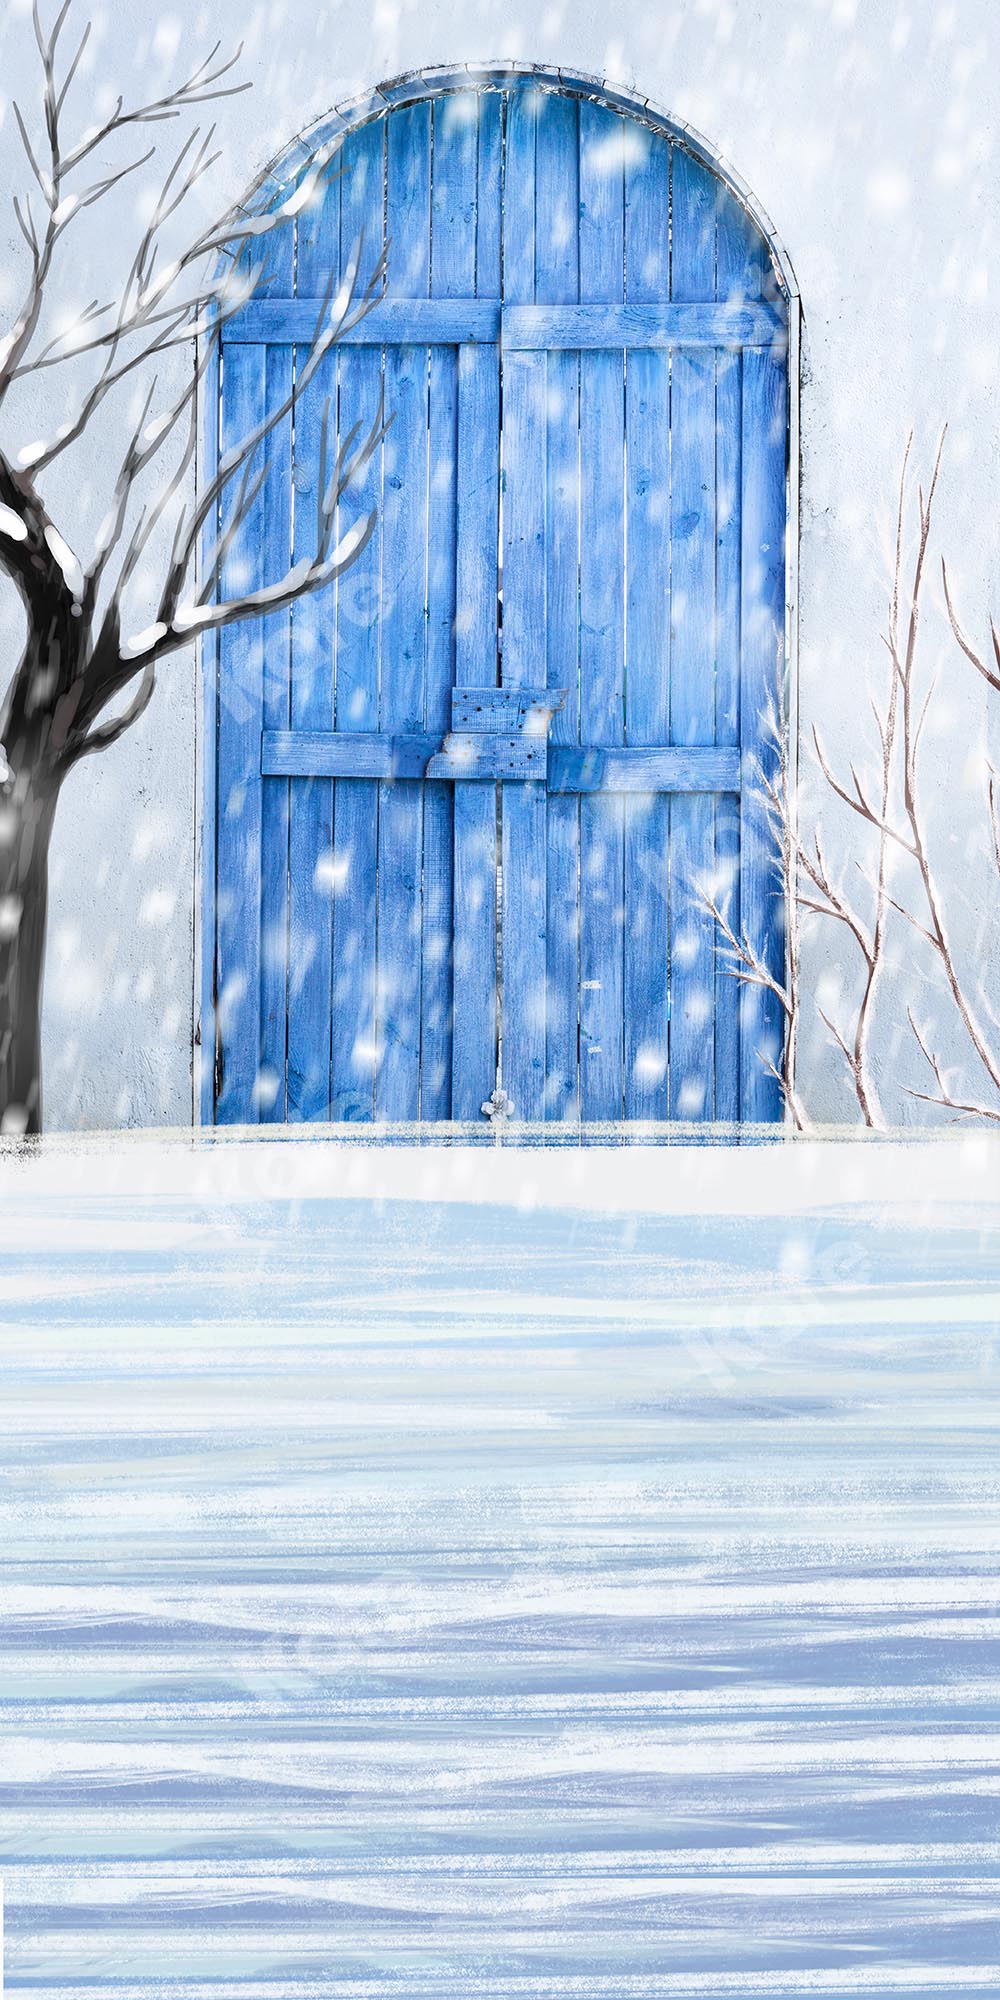 Kate Fondo de puerta azul de nieve de invierno de barrido diseñado por Chain Photography